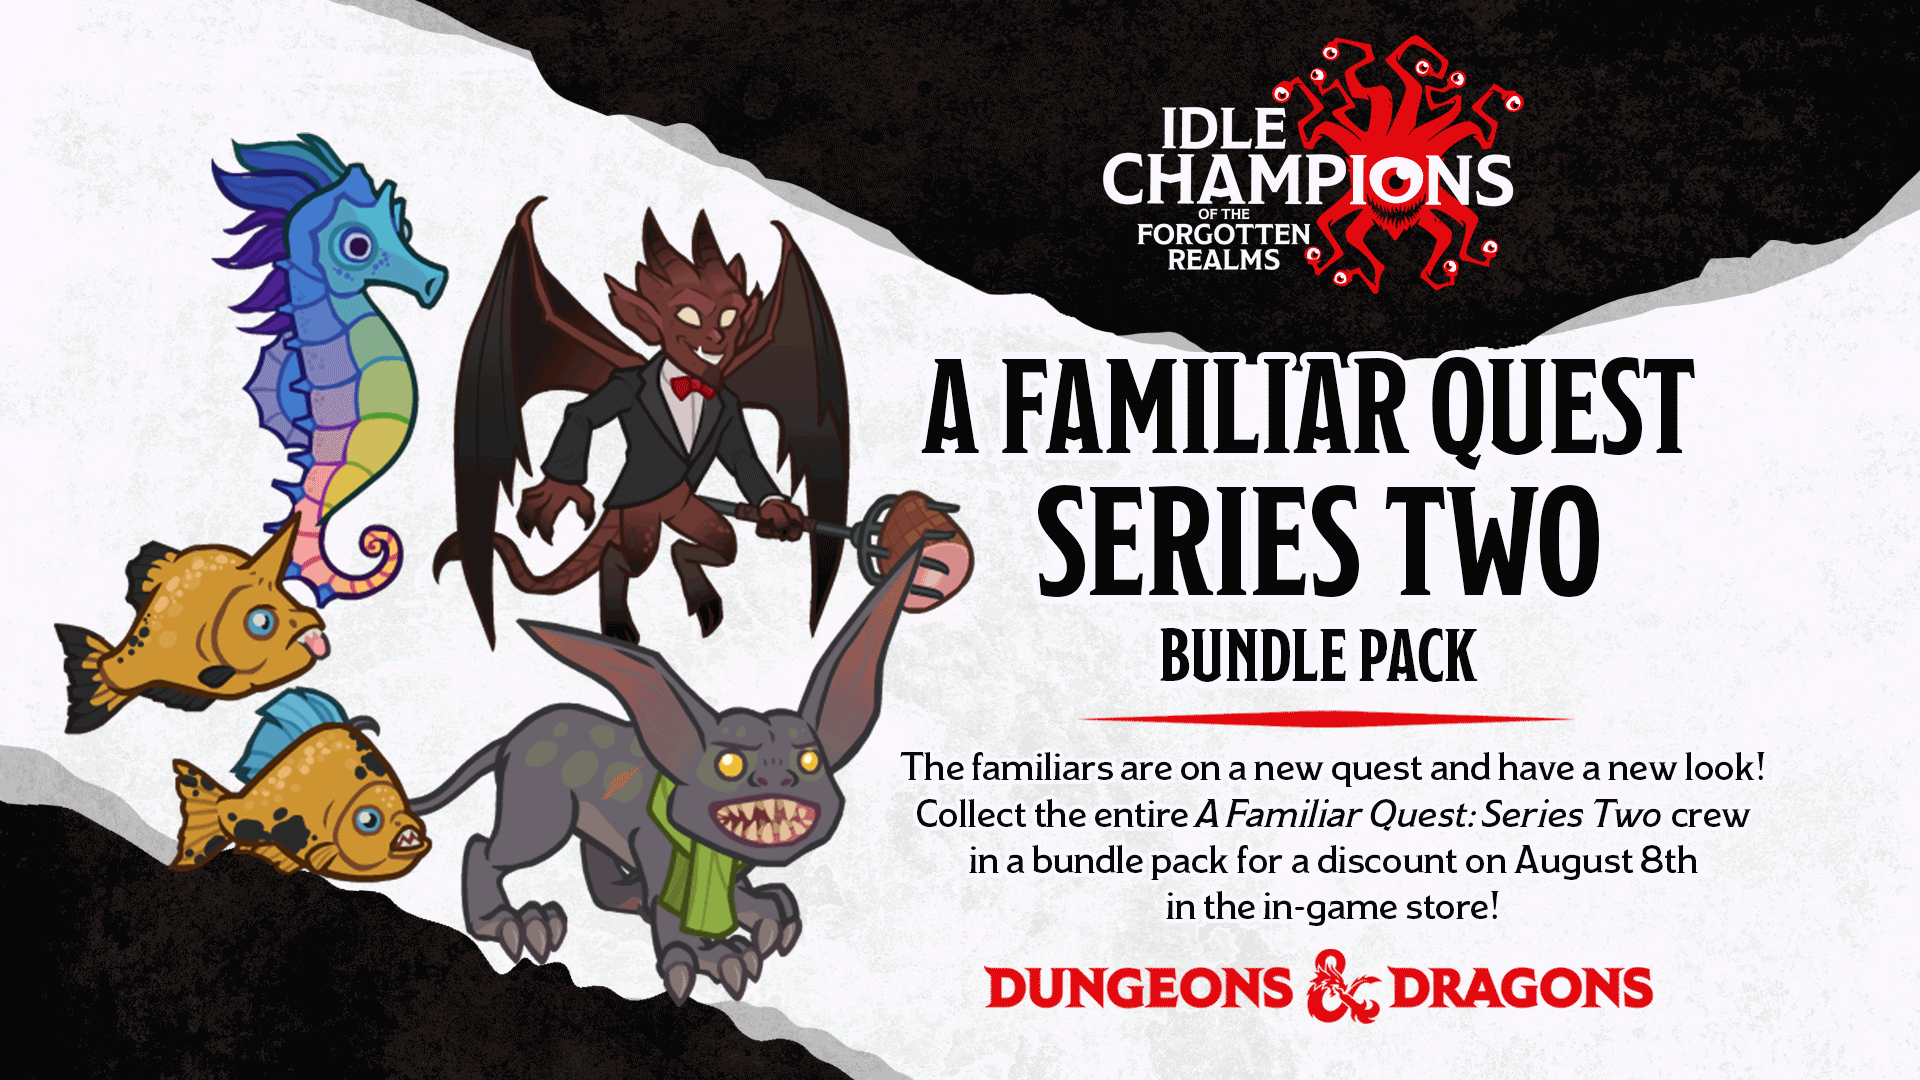 Dungeons & Dragons Idle Champions A Familiar Quest S2 Bundle Pack